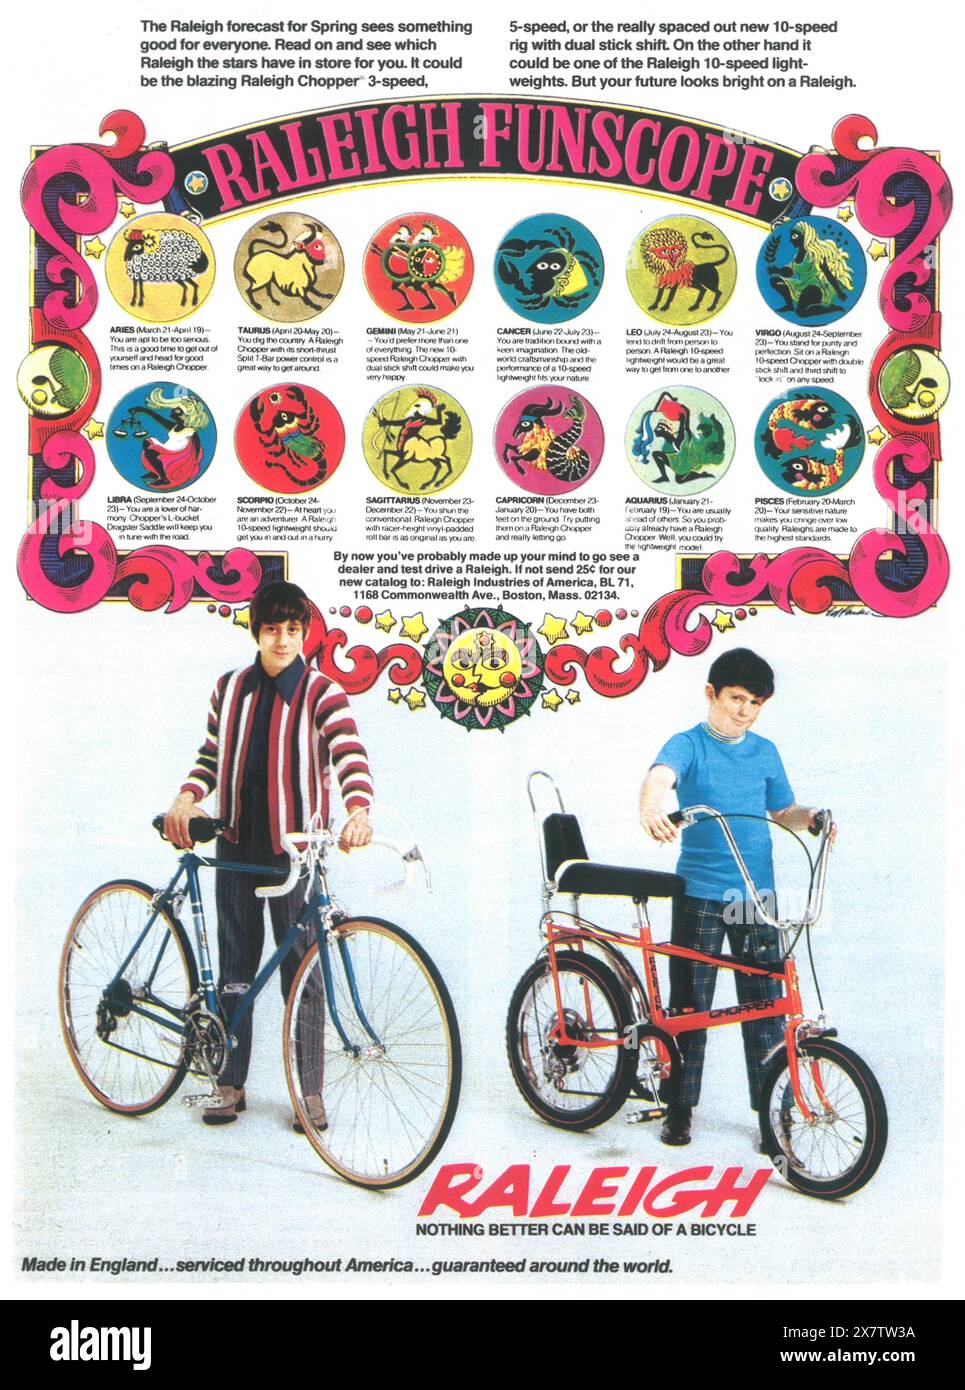 1971 Raleigh bikes ad - Raleigh Funscope Stock Photo